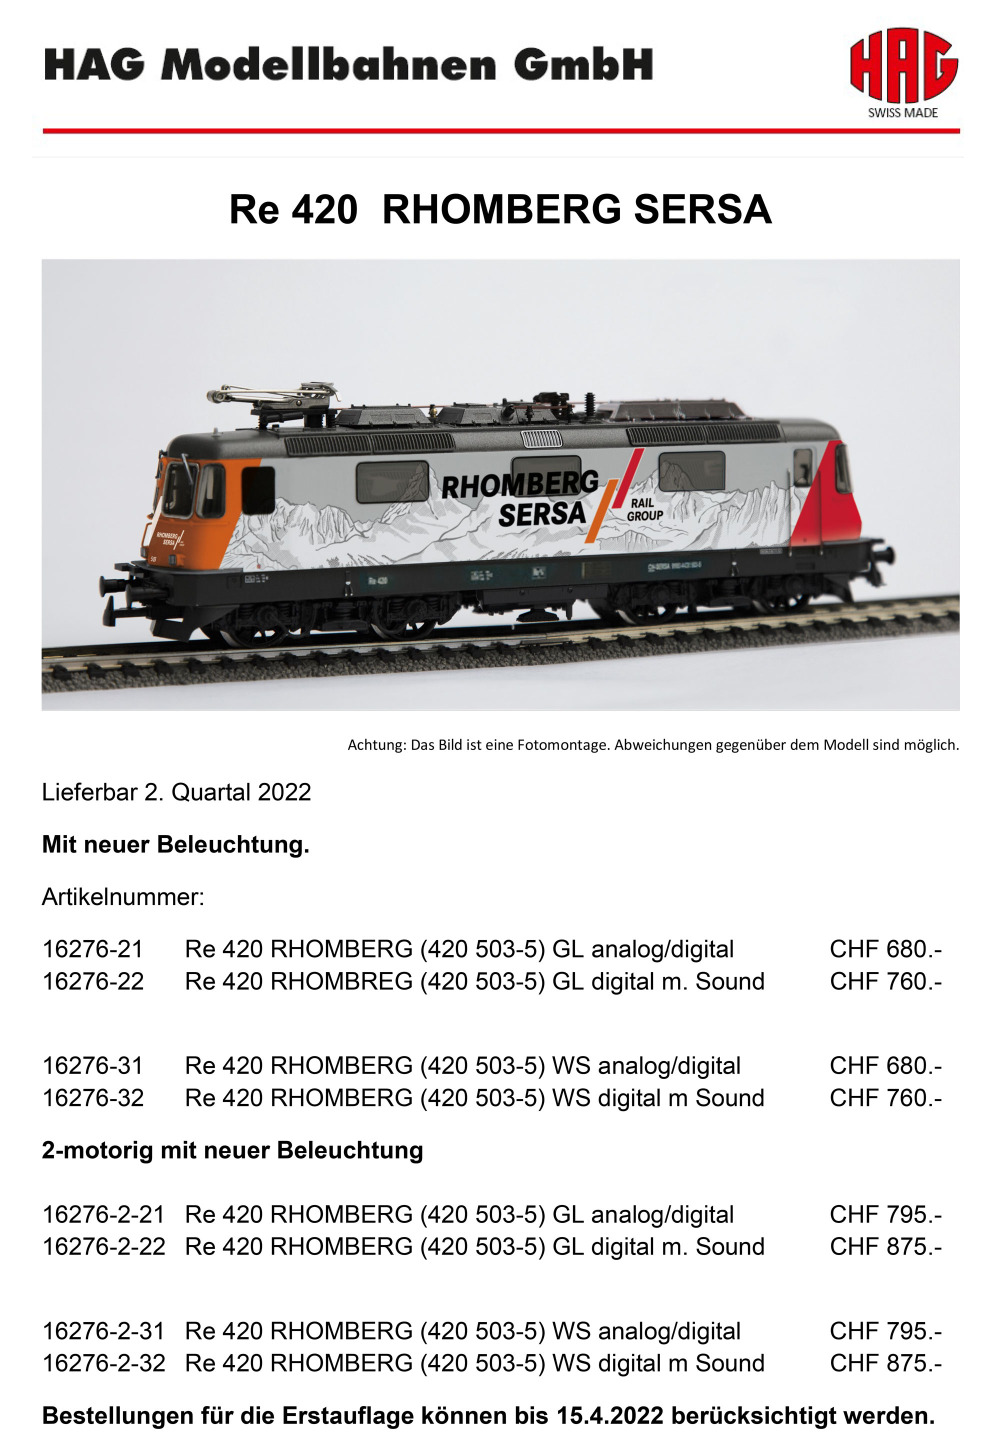 HAG - RHOMBERG SERSA - Re 420 electric locomotive